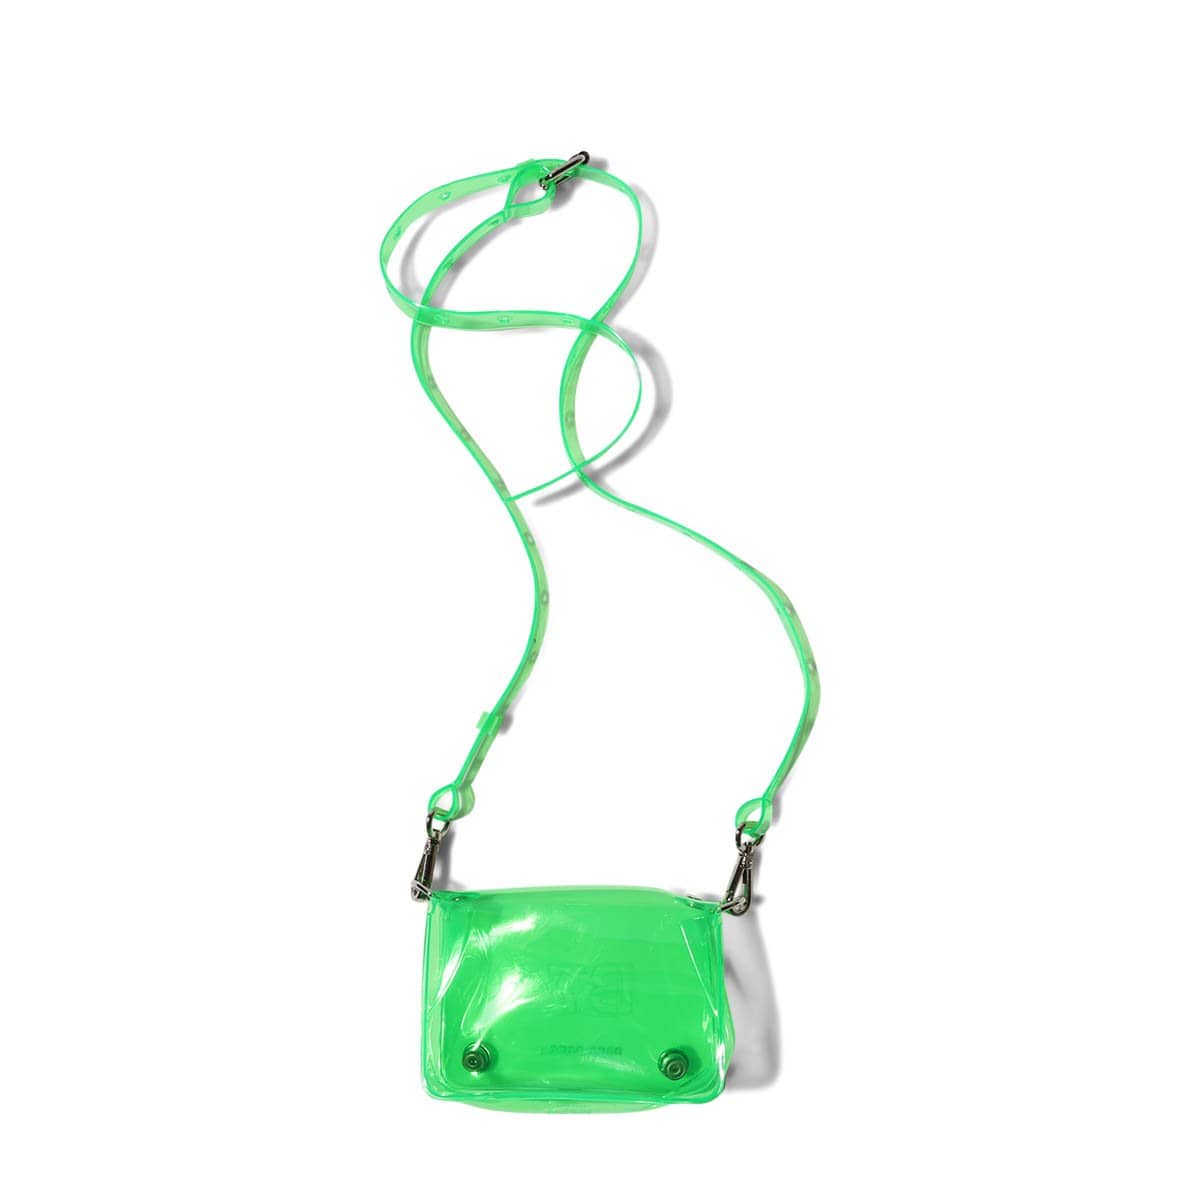 nana-nana Bags & Accessories NEON GREEN / O/S PVC B7